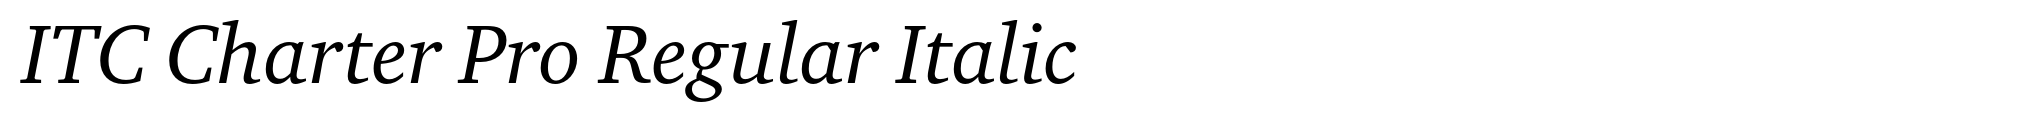 ITC Charter Pro Regular Italic image